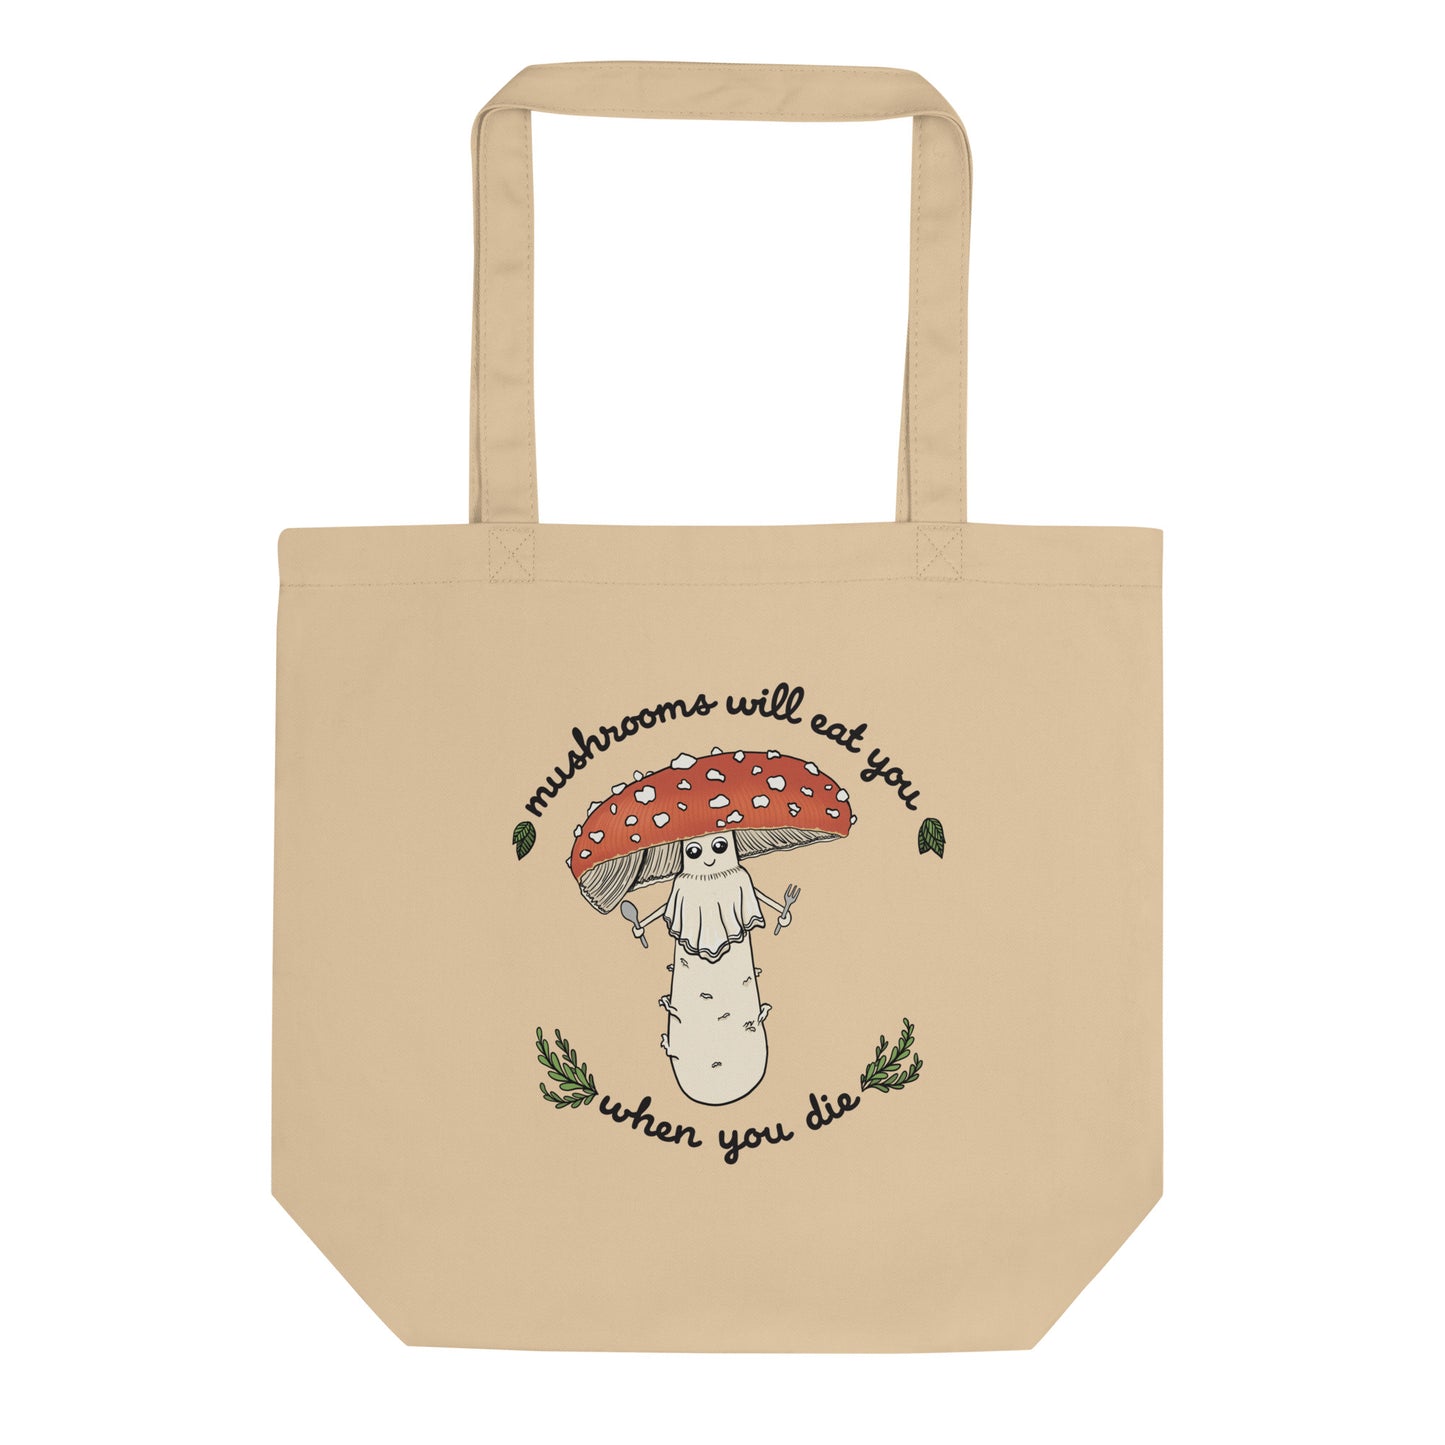 Mushrooms Will Eat You When You Die | Eco-Friendly Tote Bag | Funny Mushroom Artwork